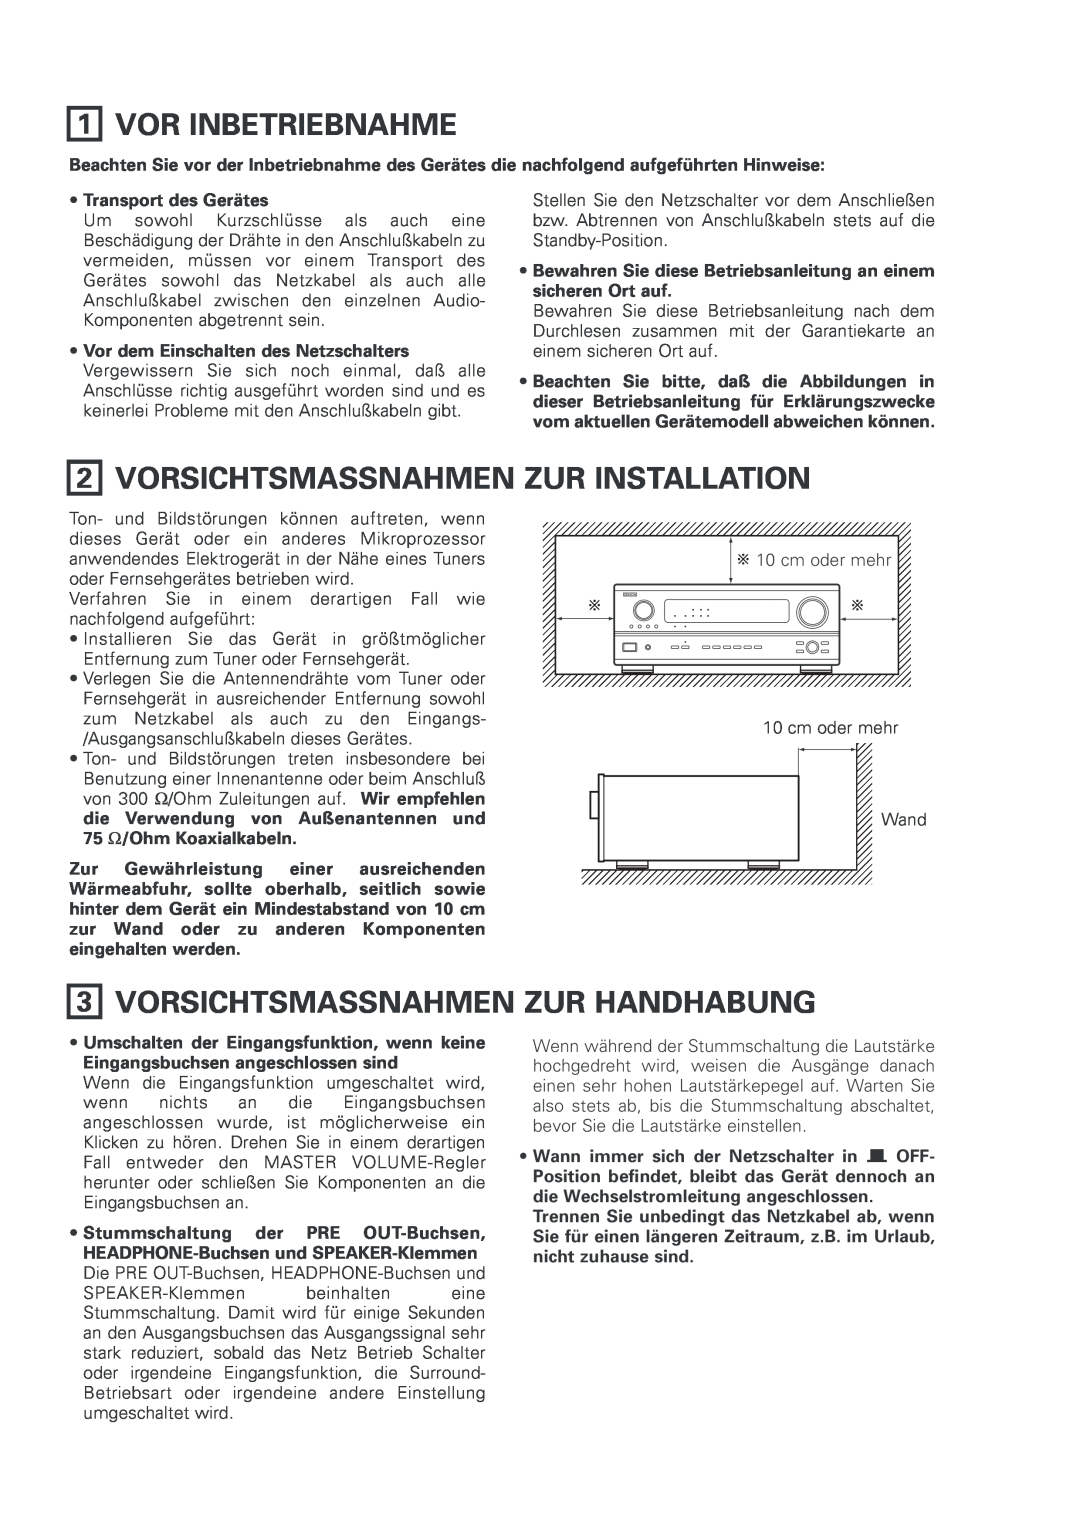 Denon AVR-2803 manual Vor Inbetriebnahme, Vorsichtsmassnahmen Zur Installation, Vorsichtsmassnahmen Zur Handhabung 